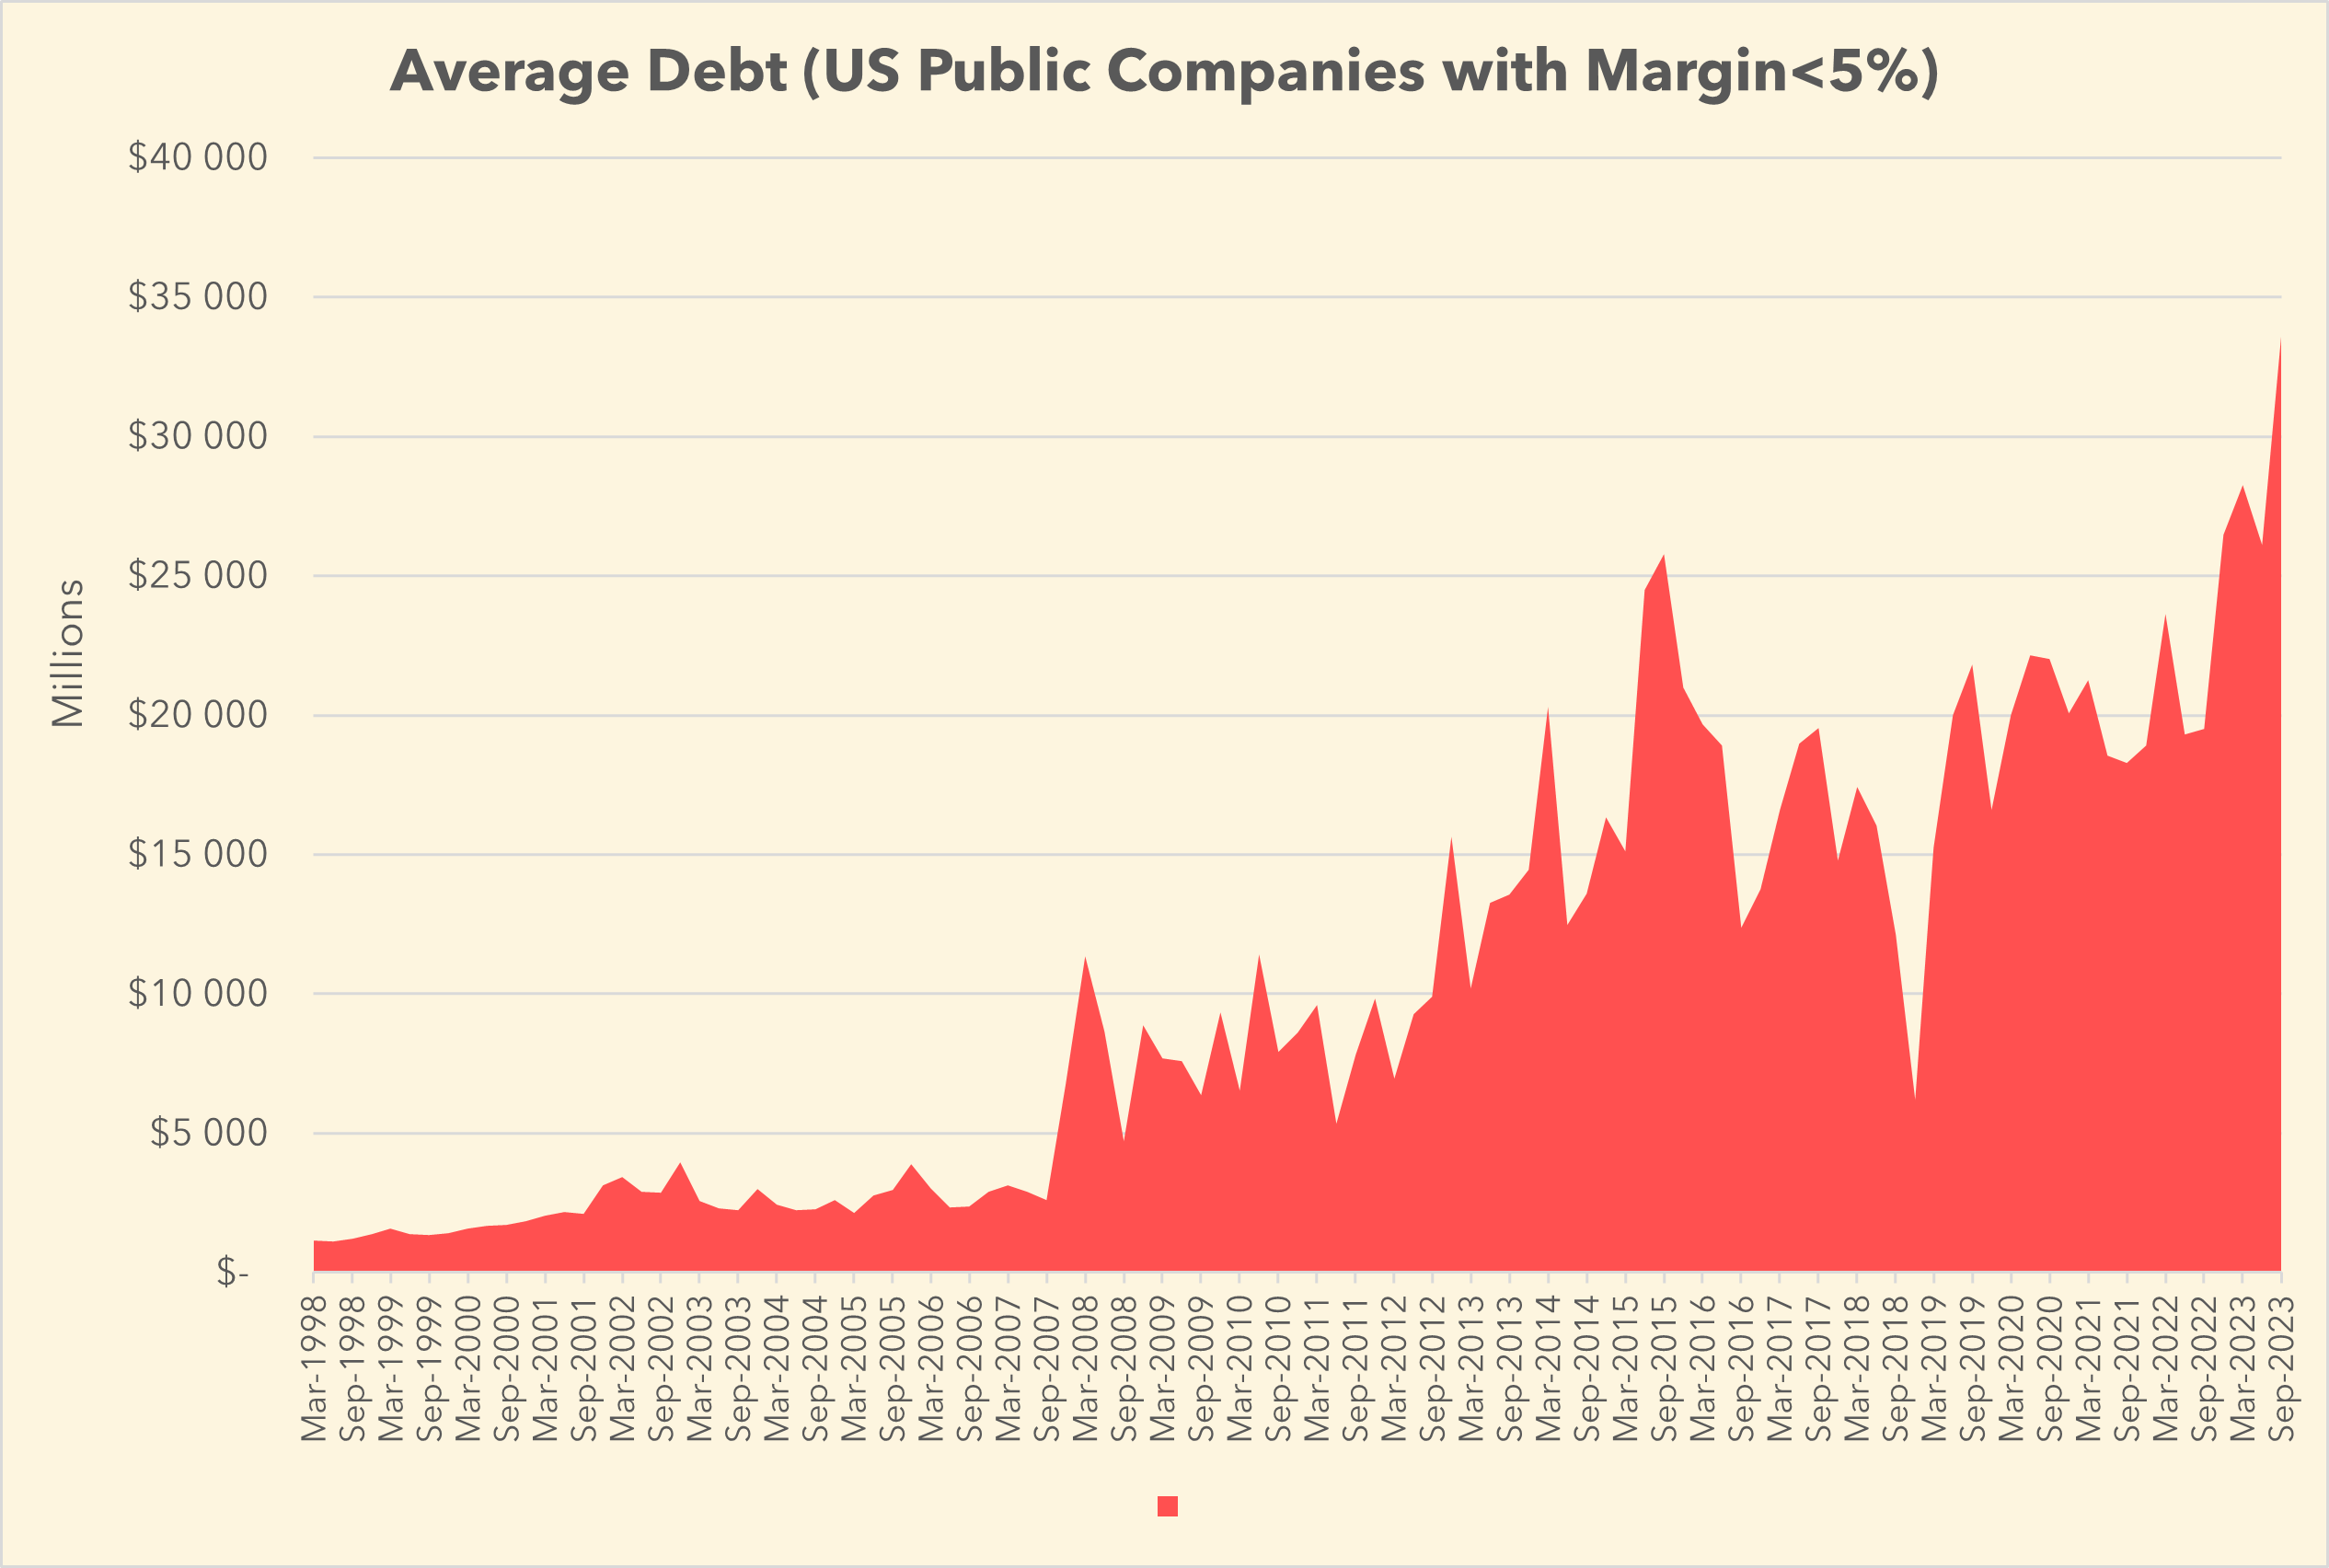 Average debt for Companies with Net Margin Under 5%